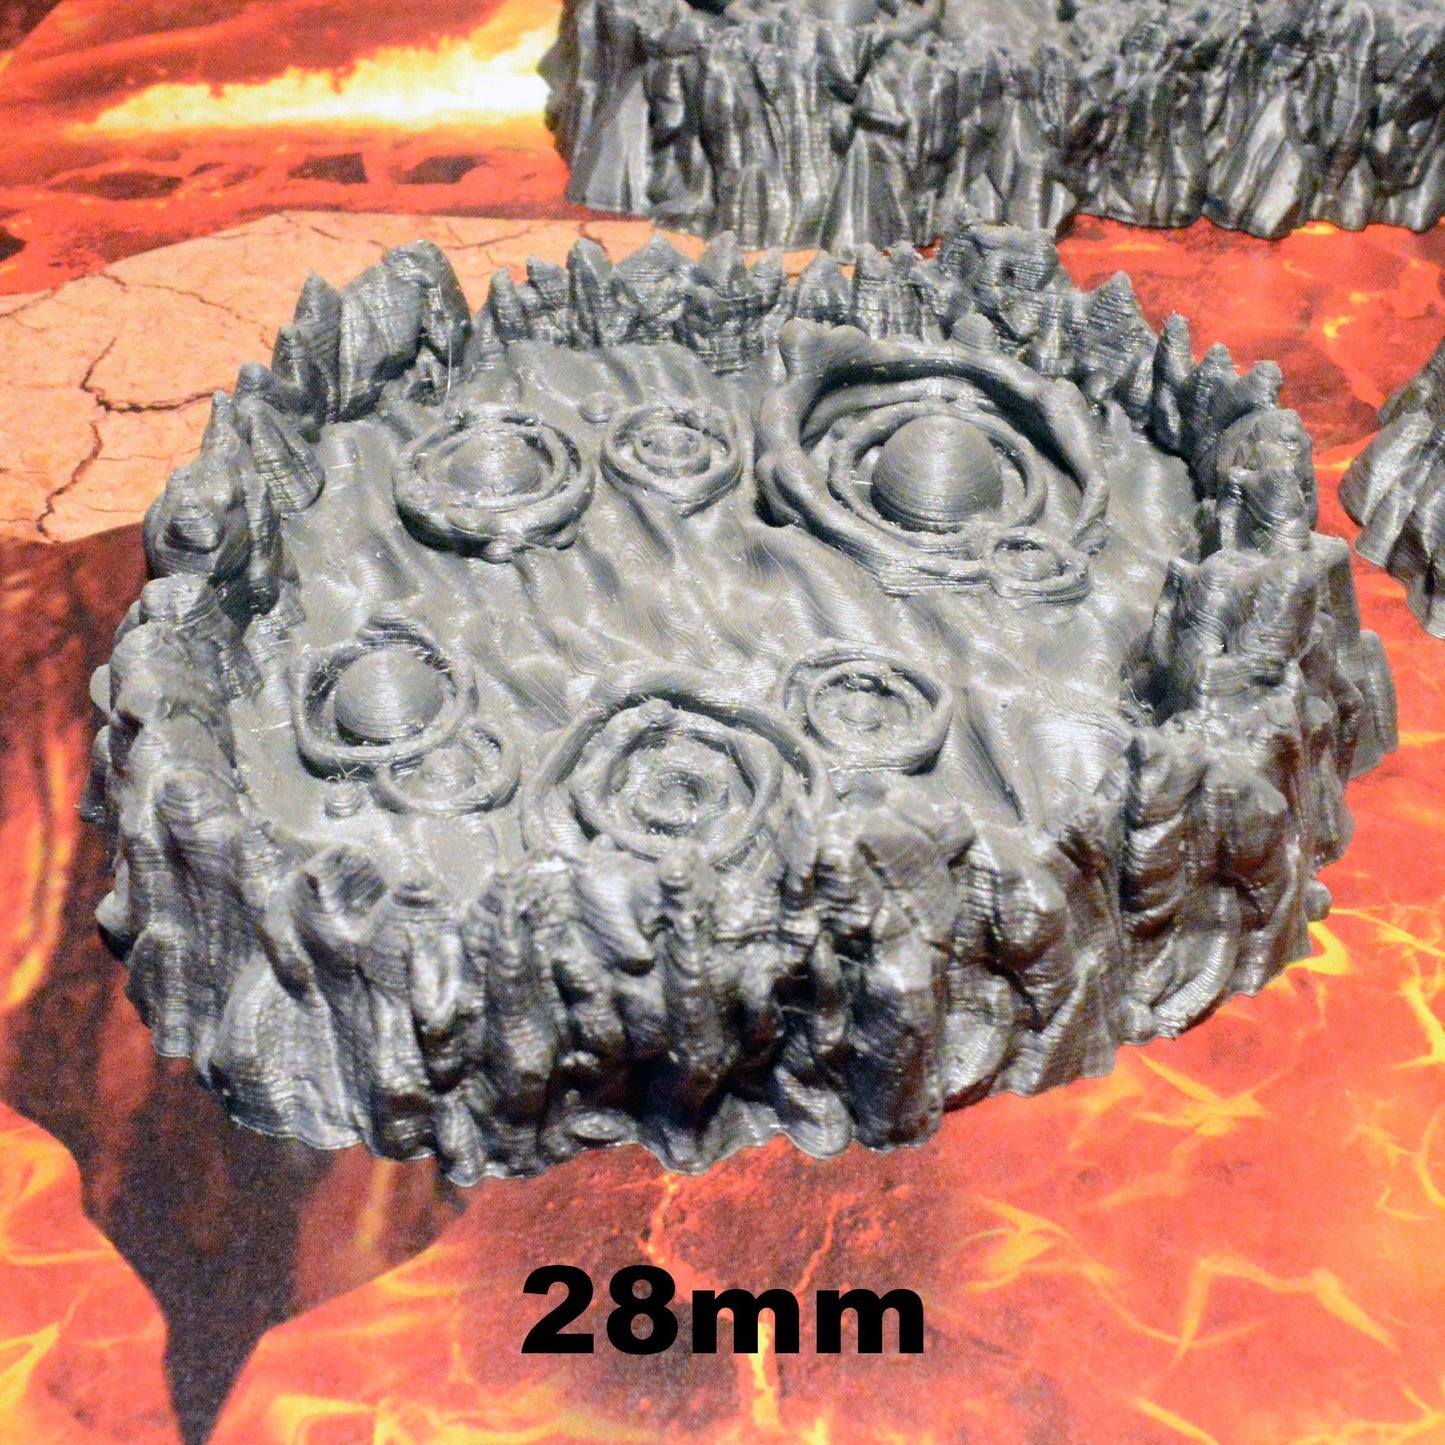 Burbling Lava Pits 15mm 28mm for D&D Terrain, Fire Molten Magma for DnD Pathfinder Wargame Skirmish Demon Terrain